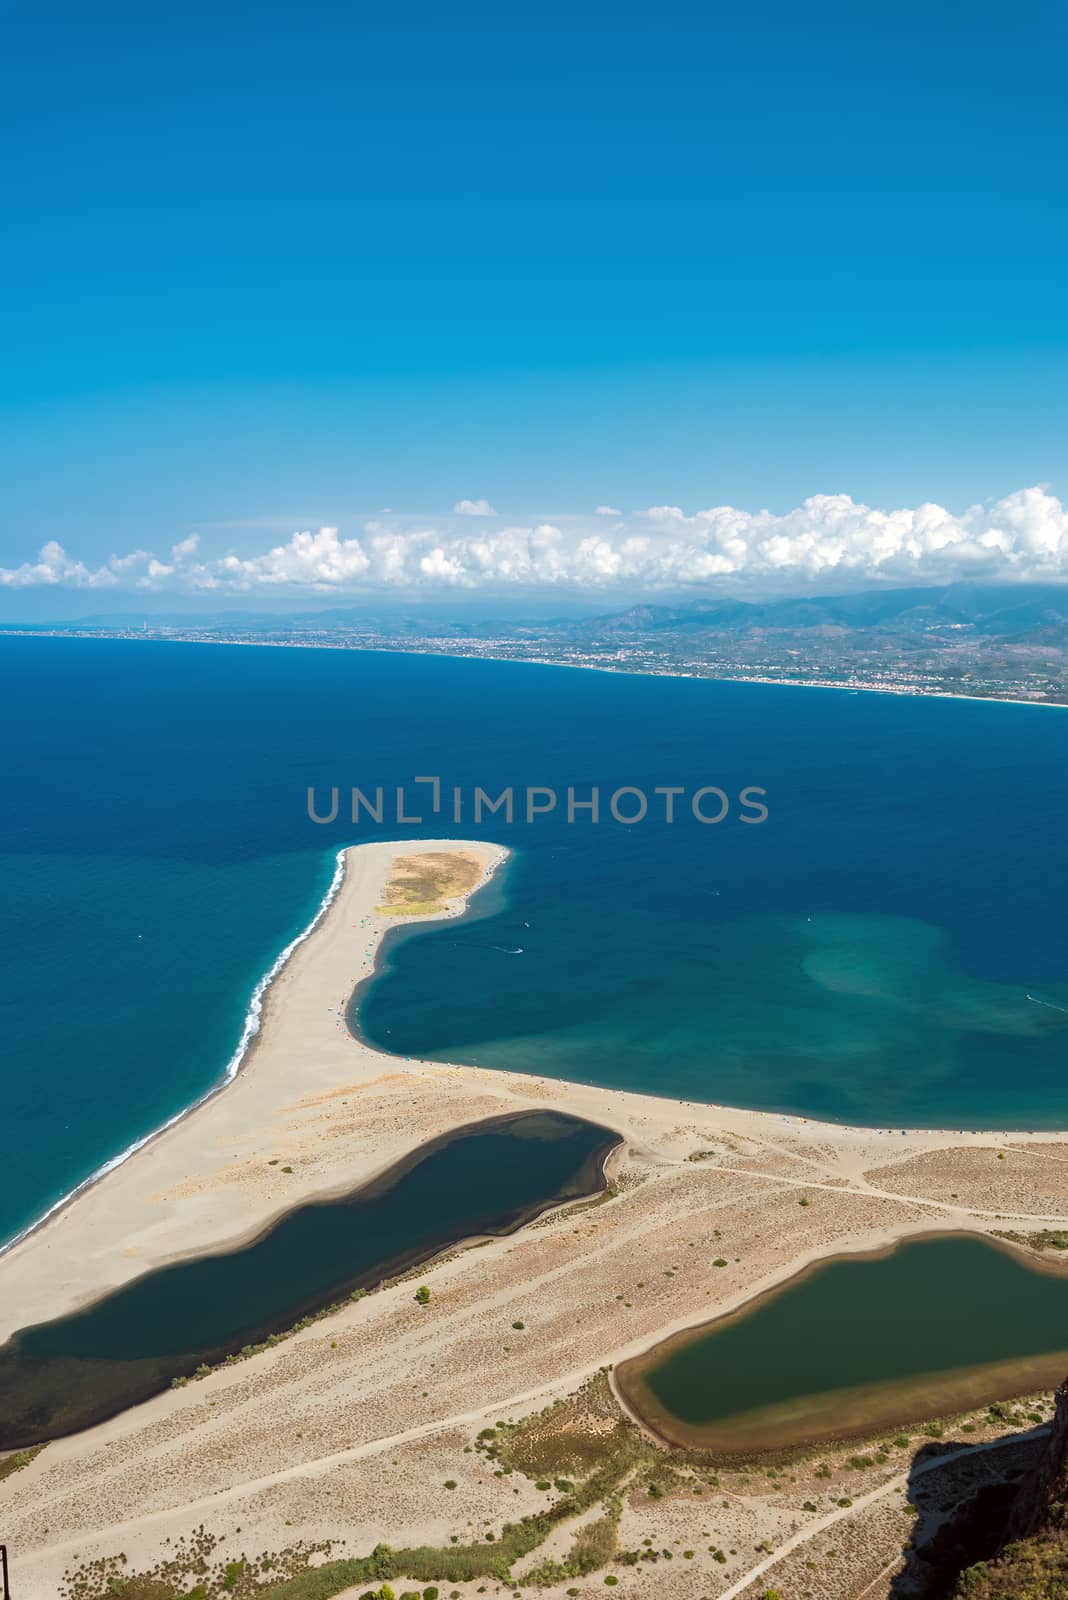 The Tindari beach in Sicily, Italy by elxeneize